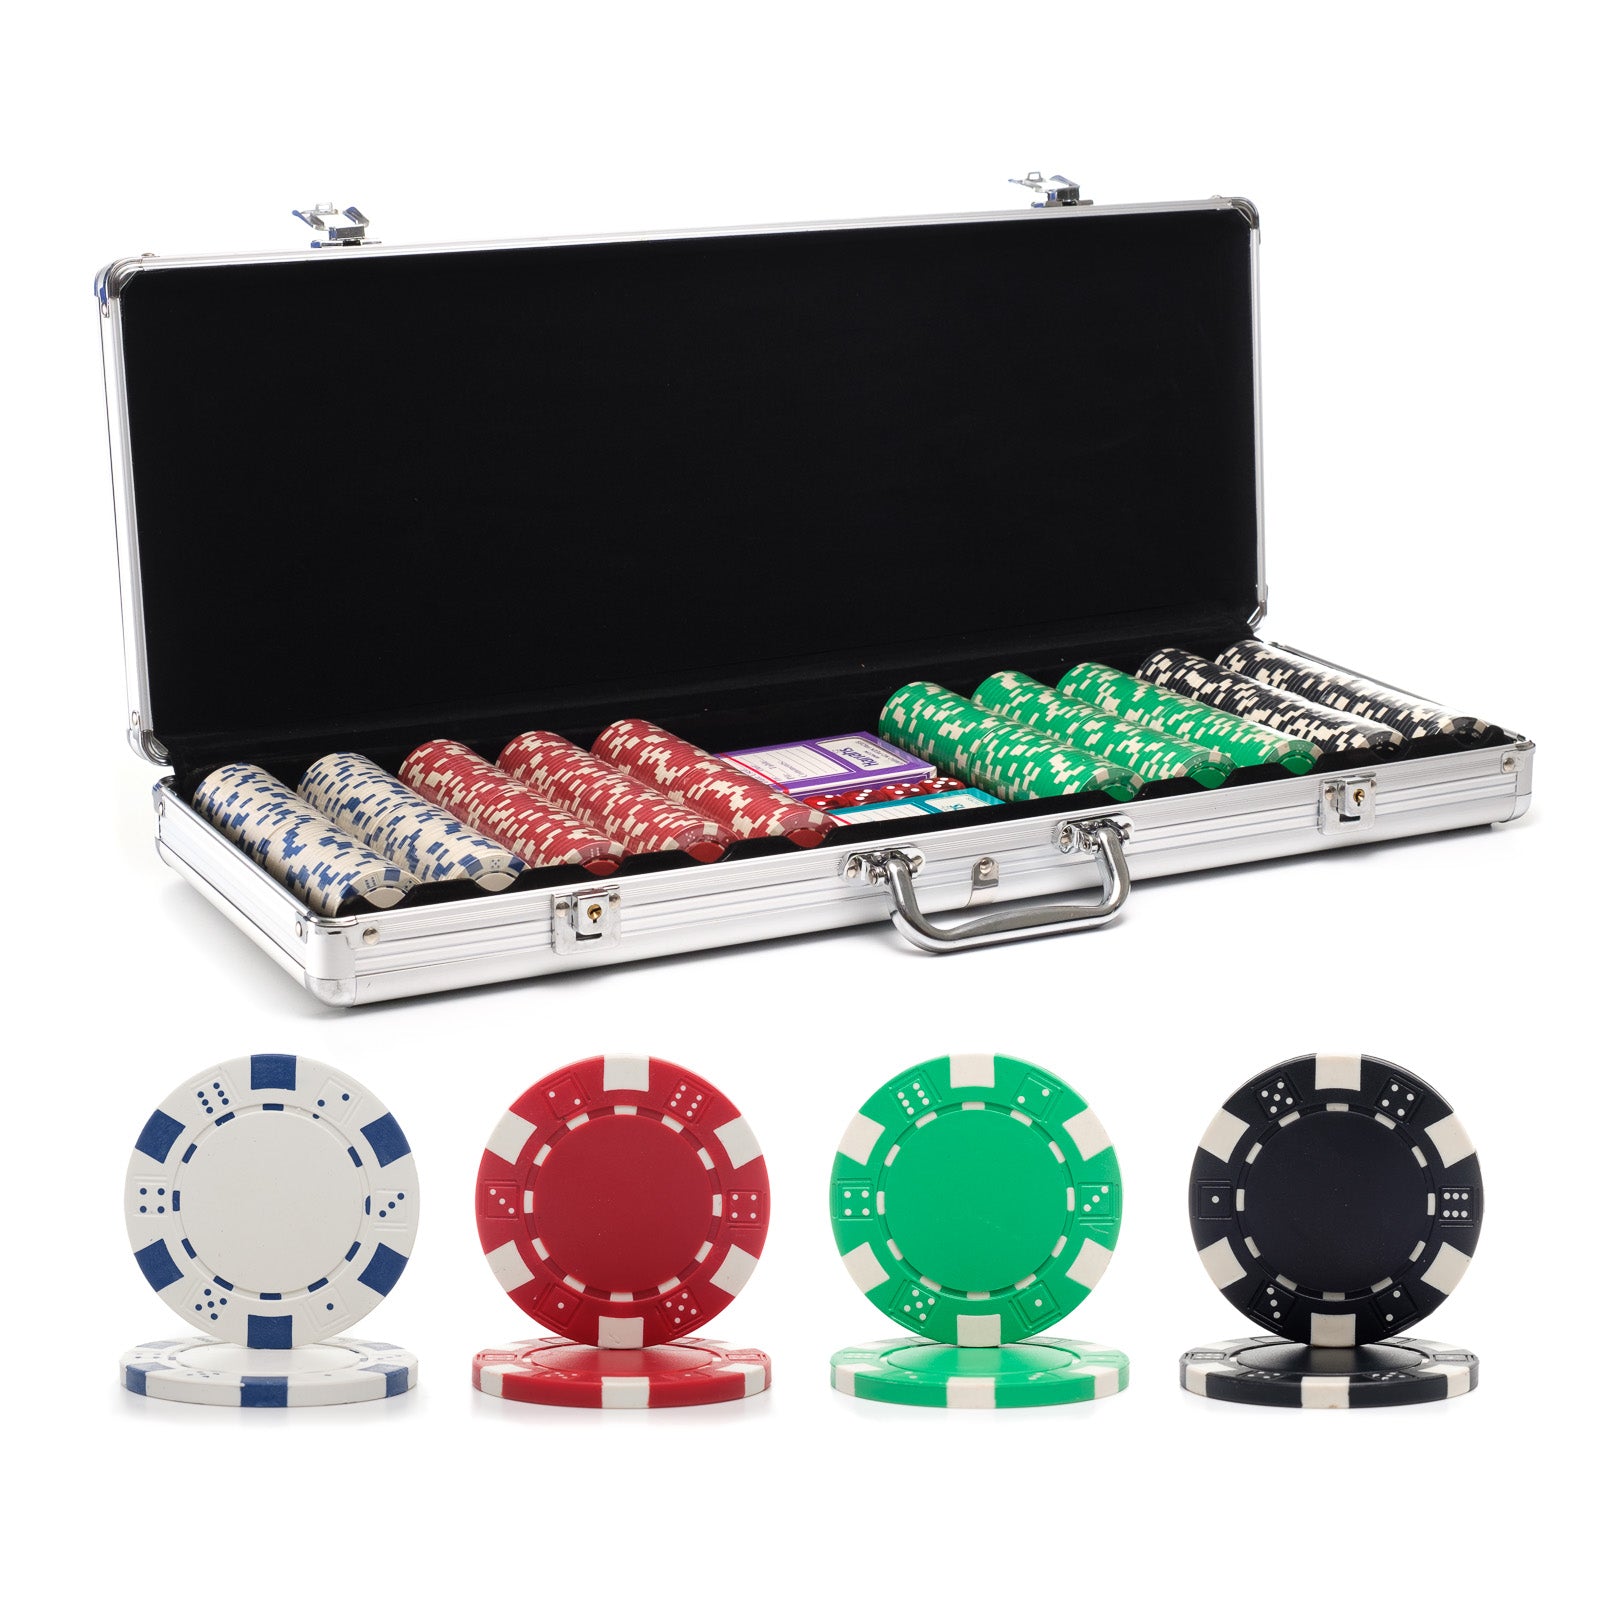 500 pc. 11.5g Dice Rim Poker Chip Set with Aluminum Case